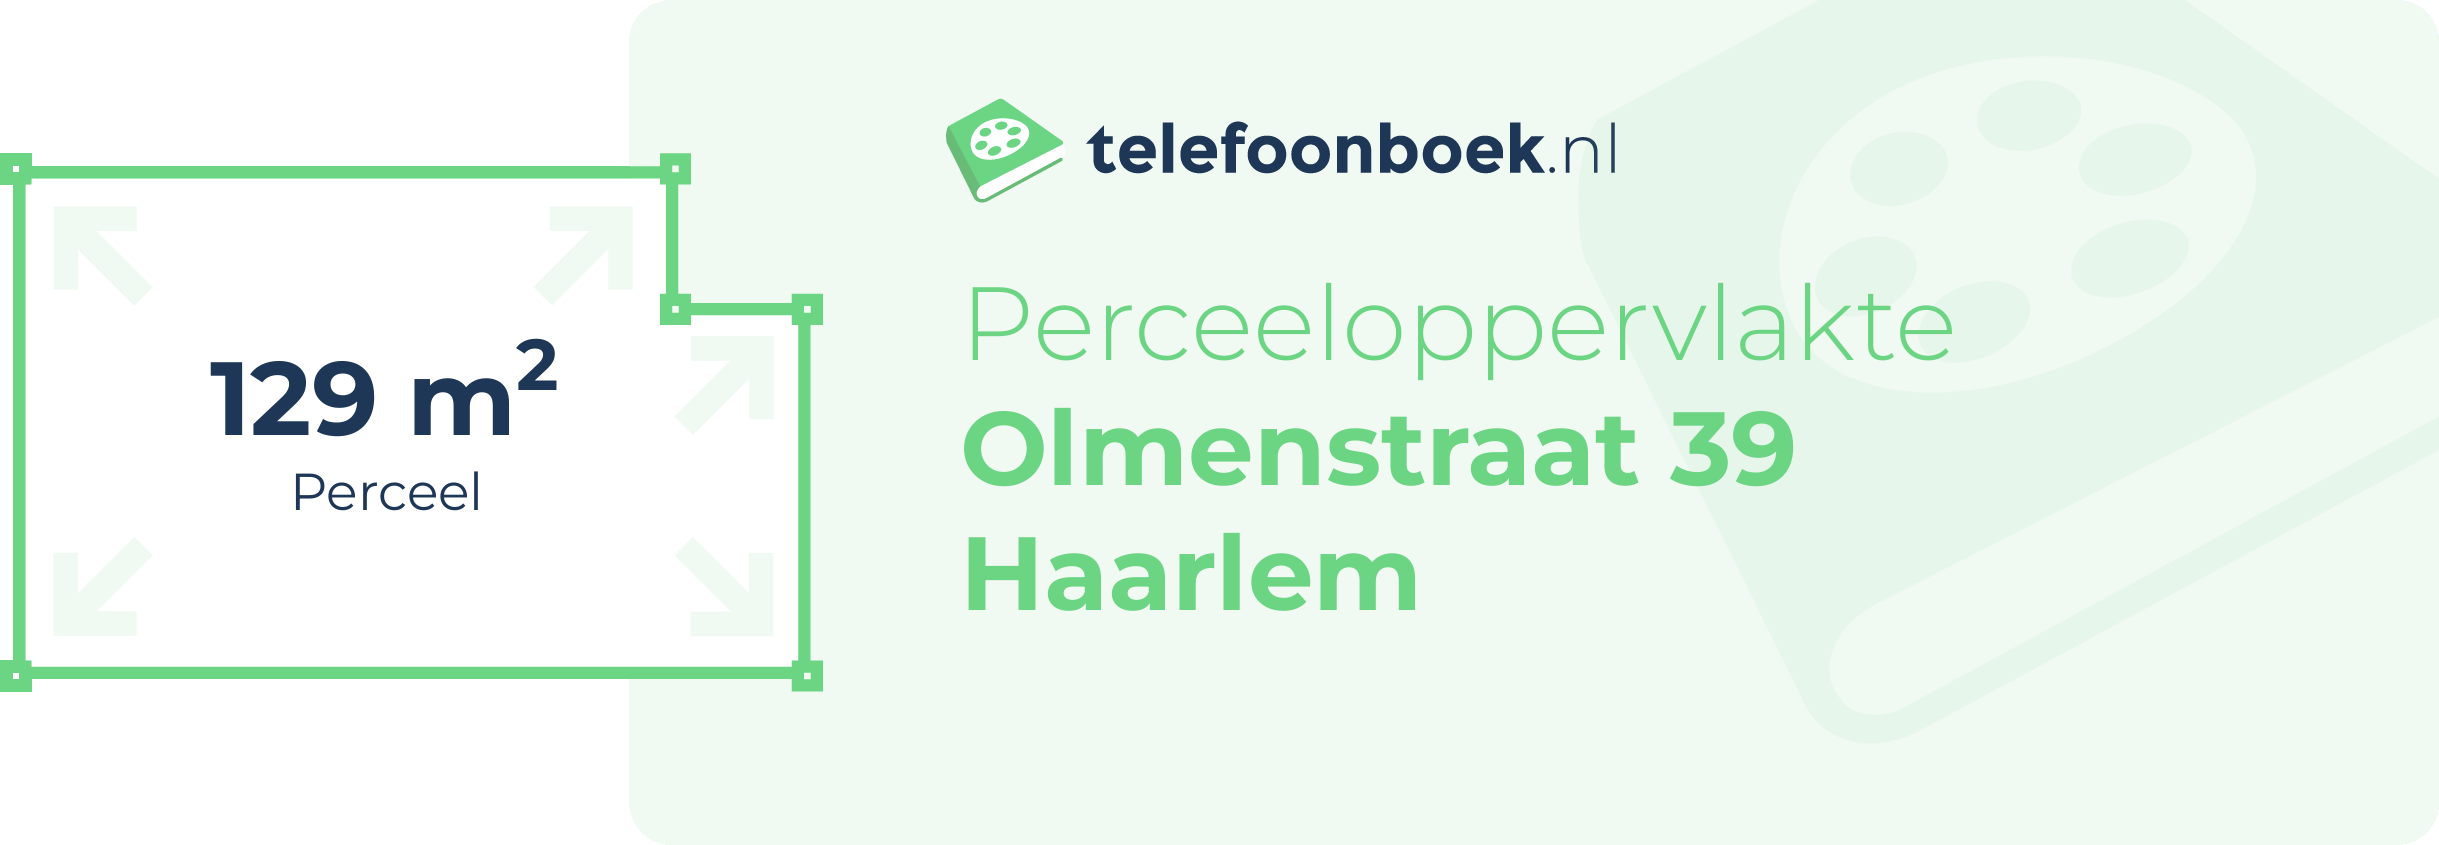 Perceeloppervlakte Olmenstraat 39 Haarlem